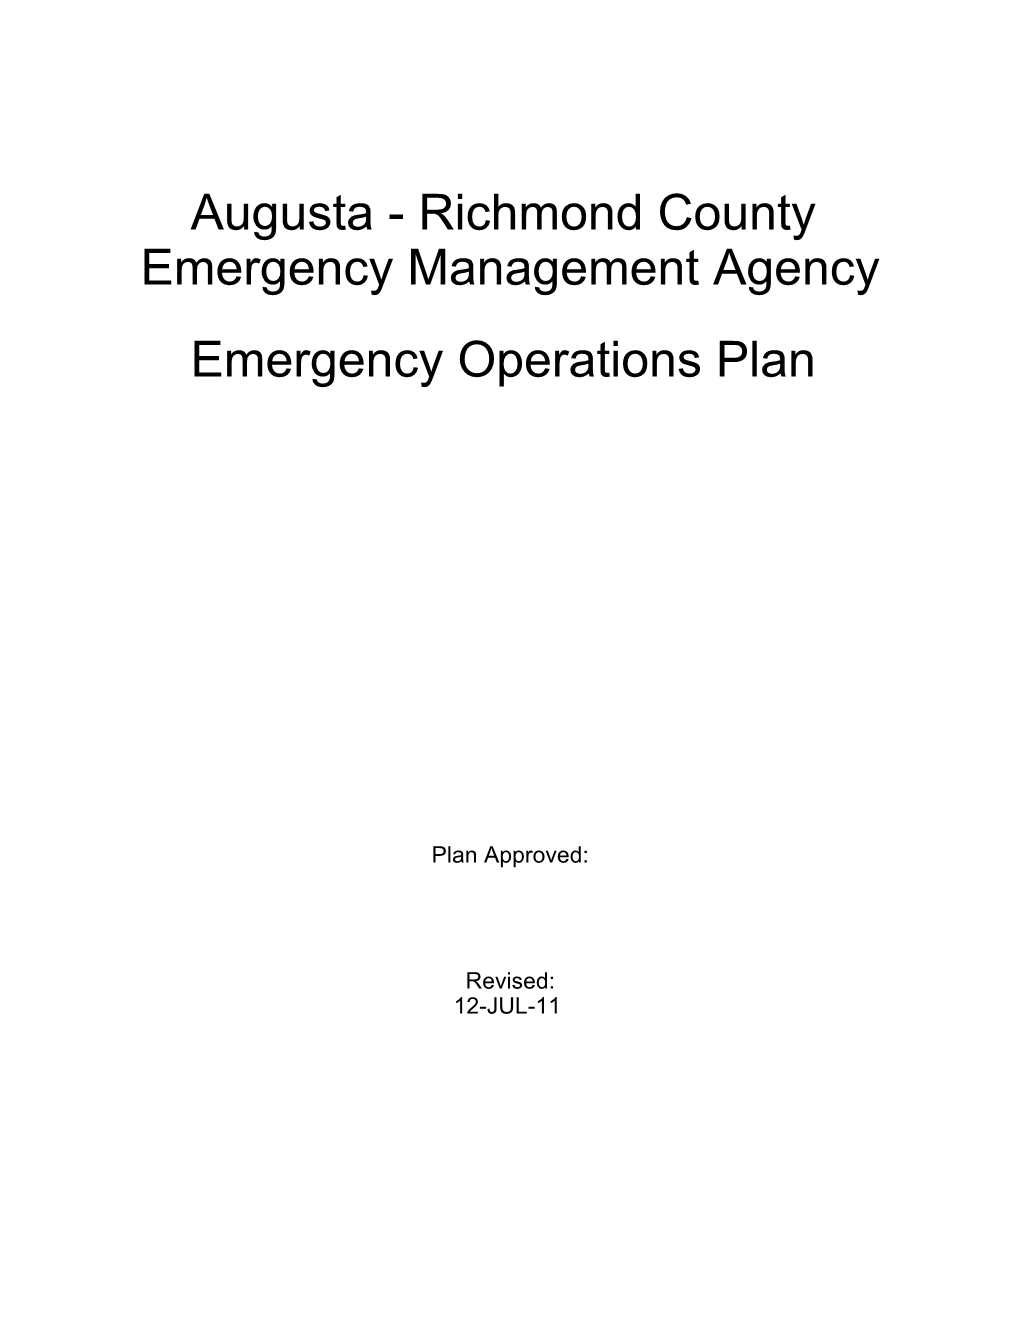 Augusta - Richmond County Emergency Management Agency Emergency Operations Plan